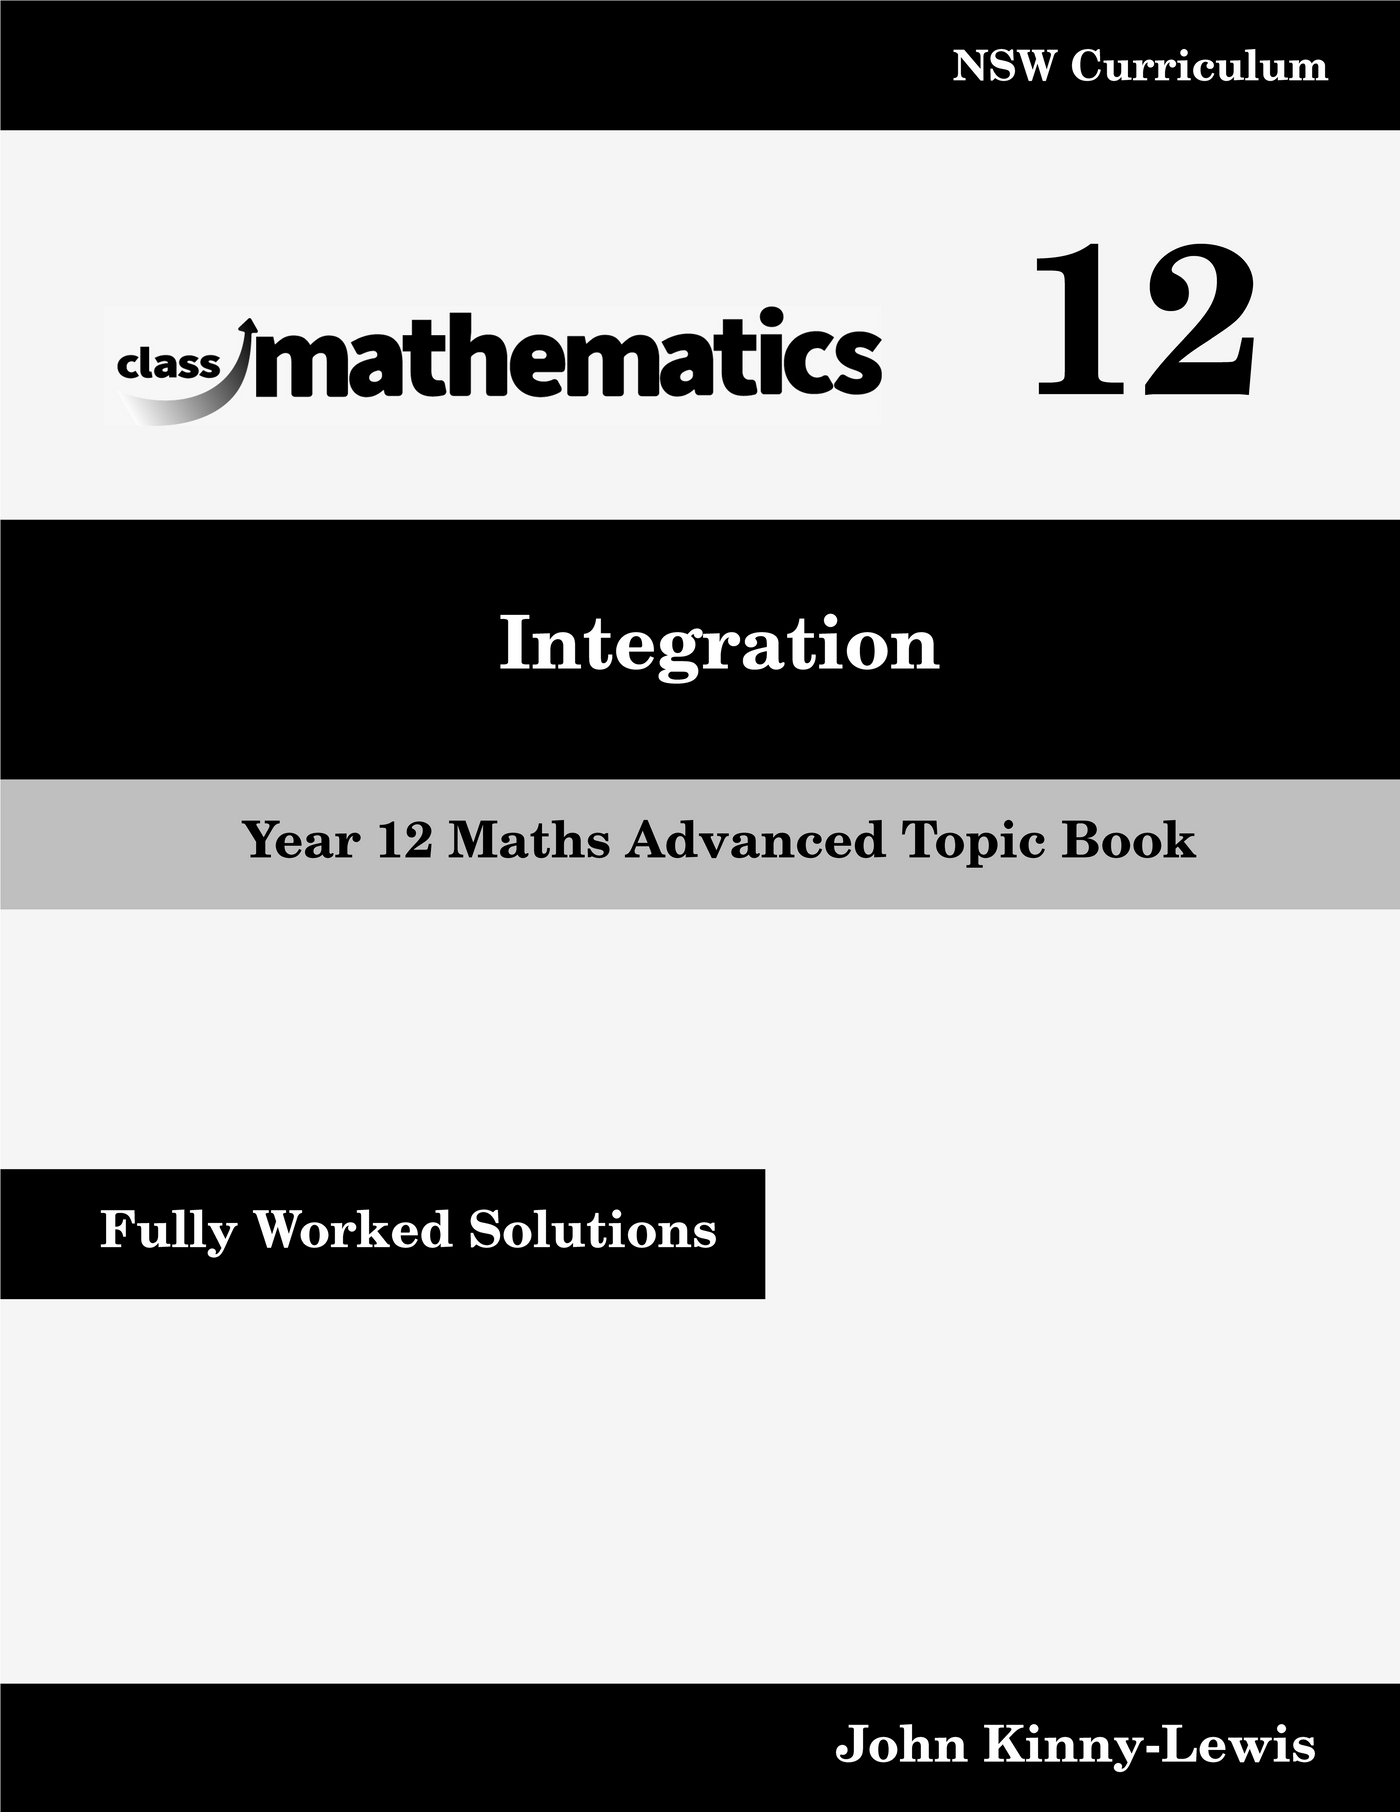 NSW Year 12 Maths Advanced - Integration